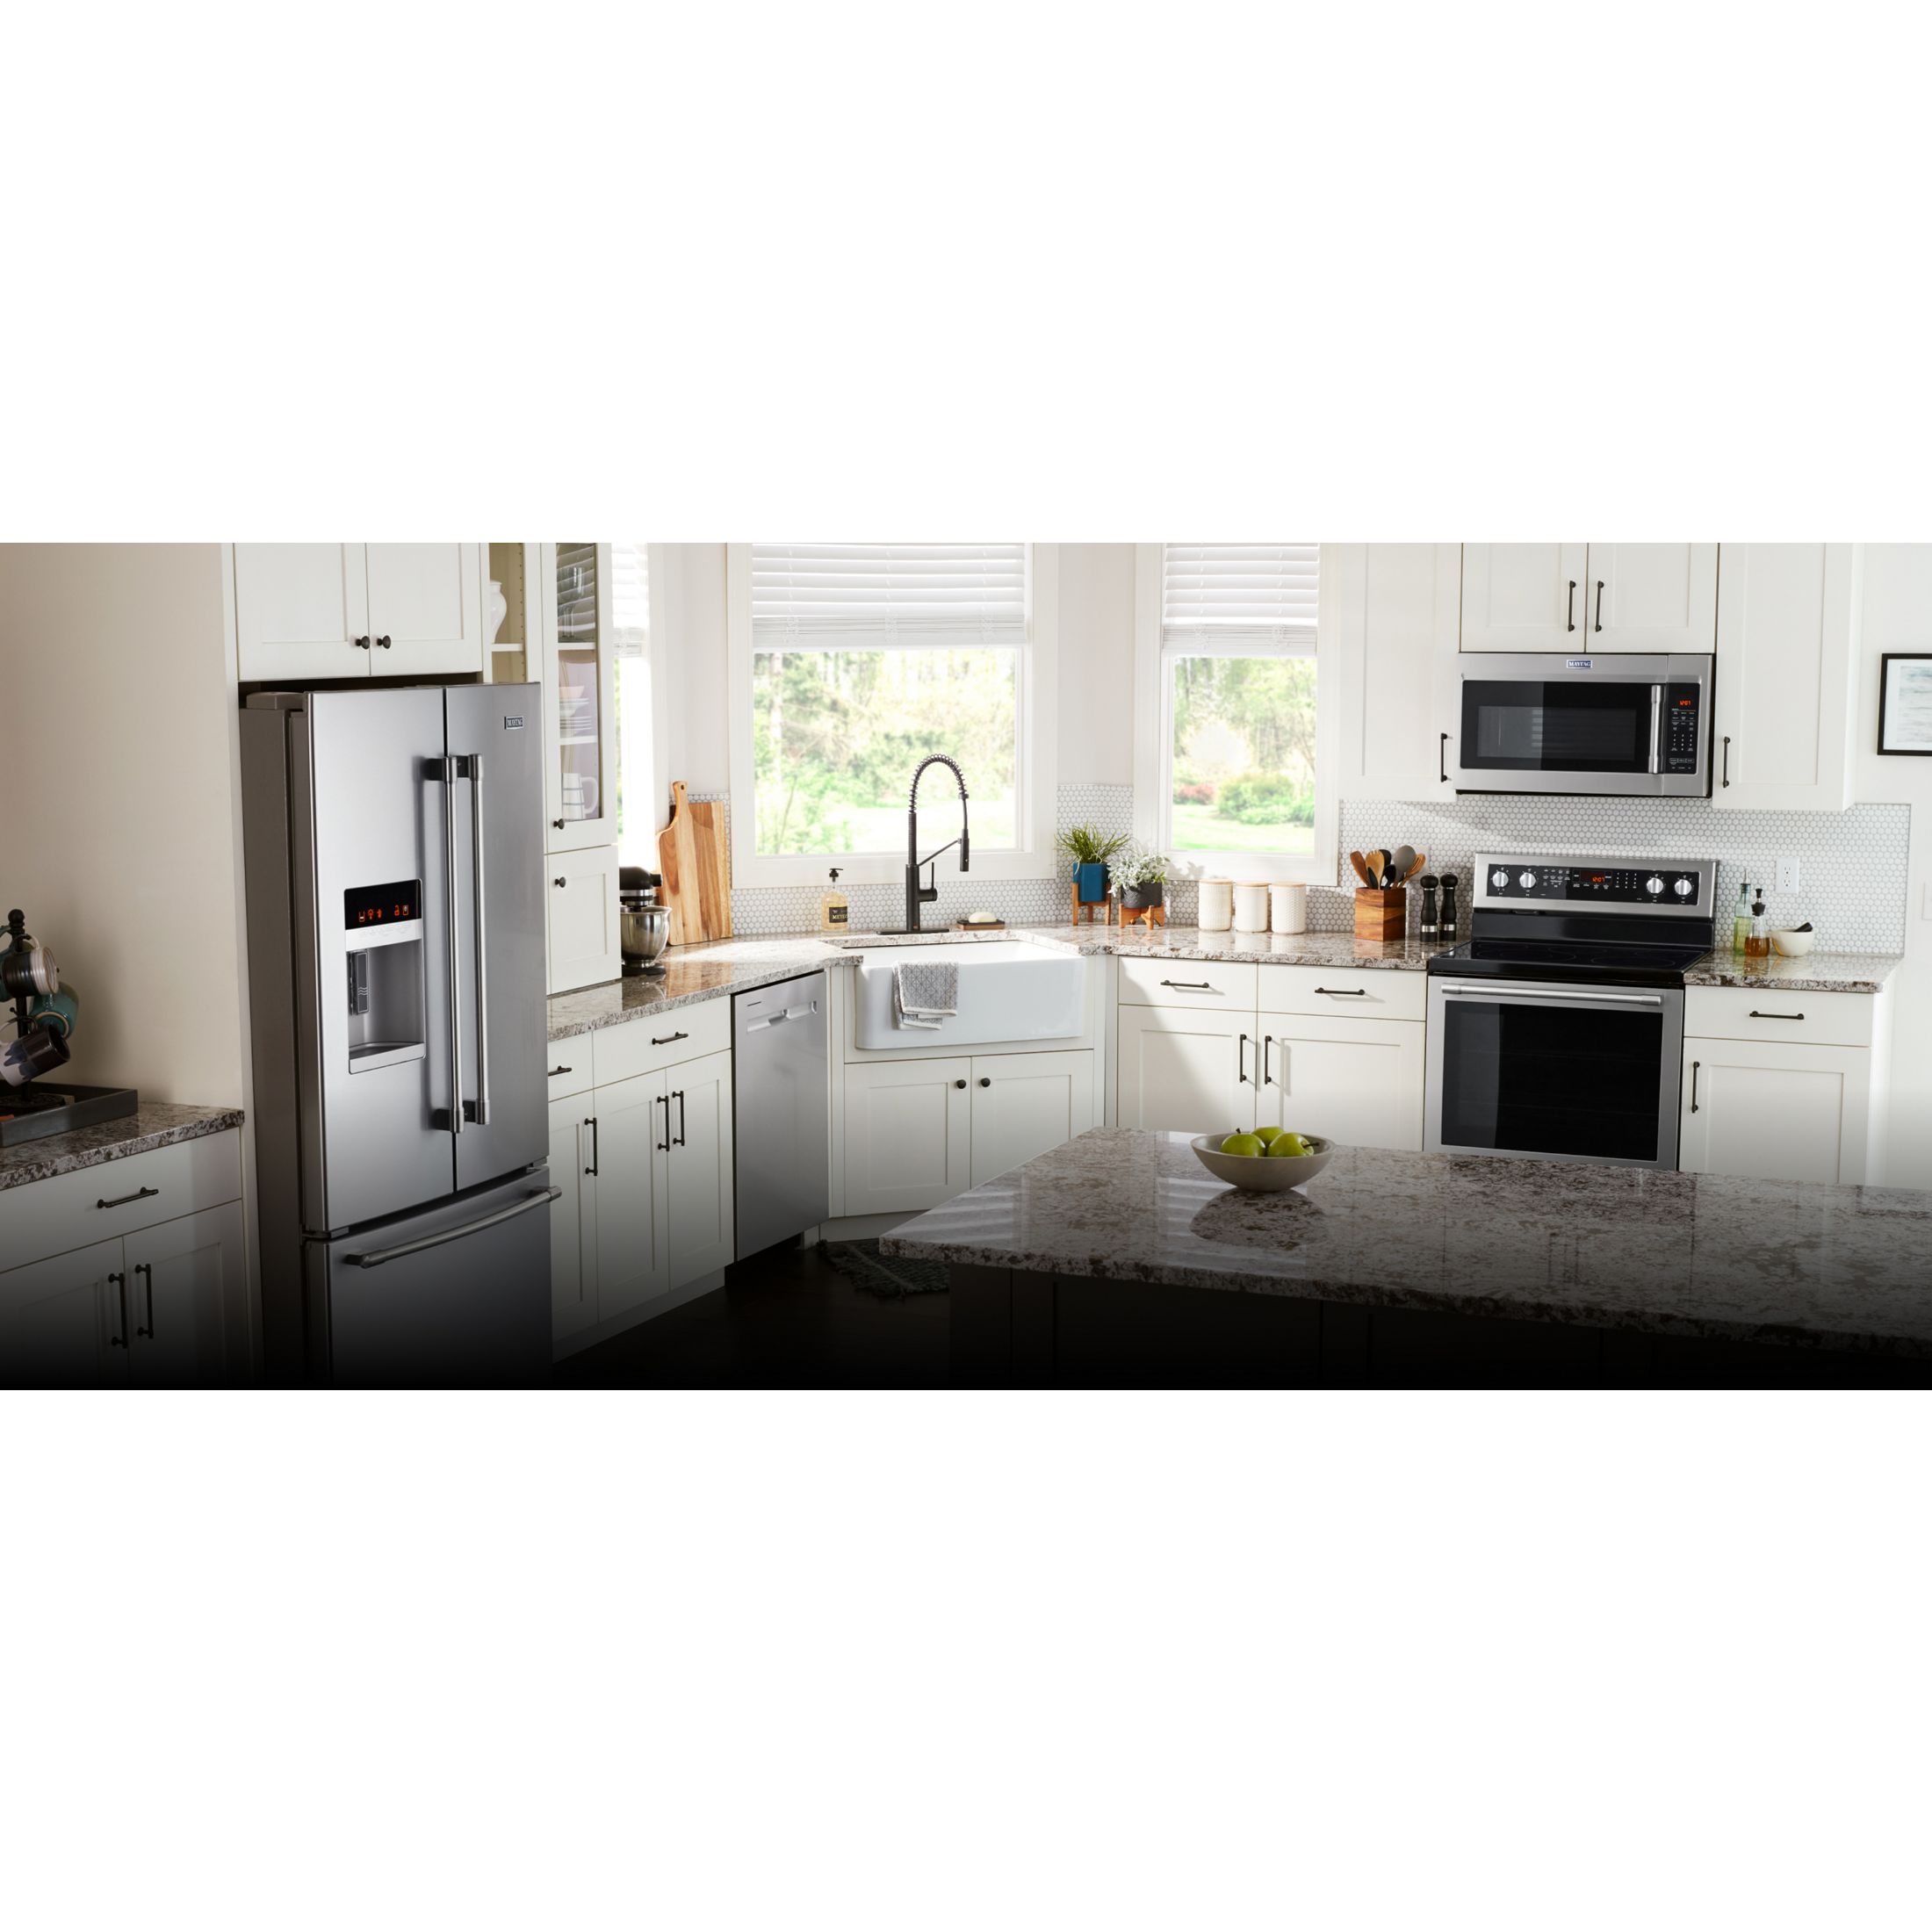 Explore Dependable Kitchen Appliances Maytag